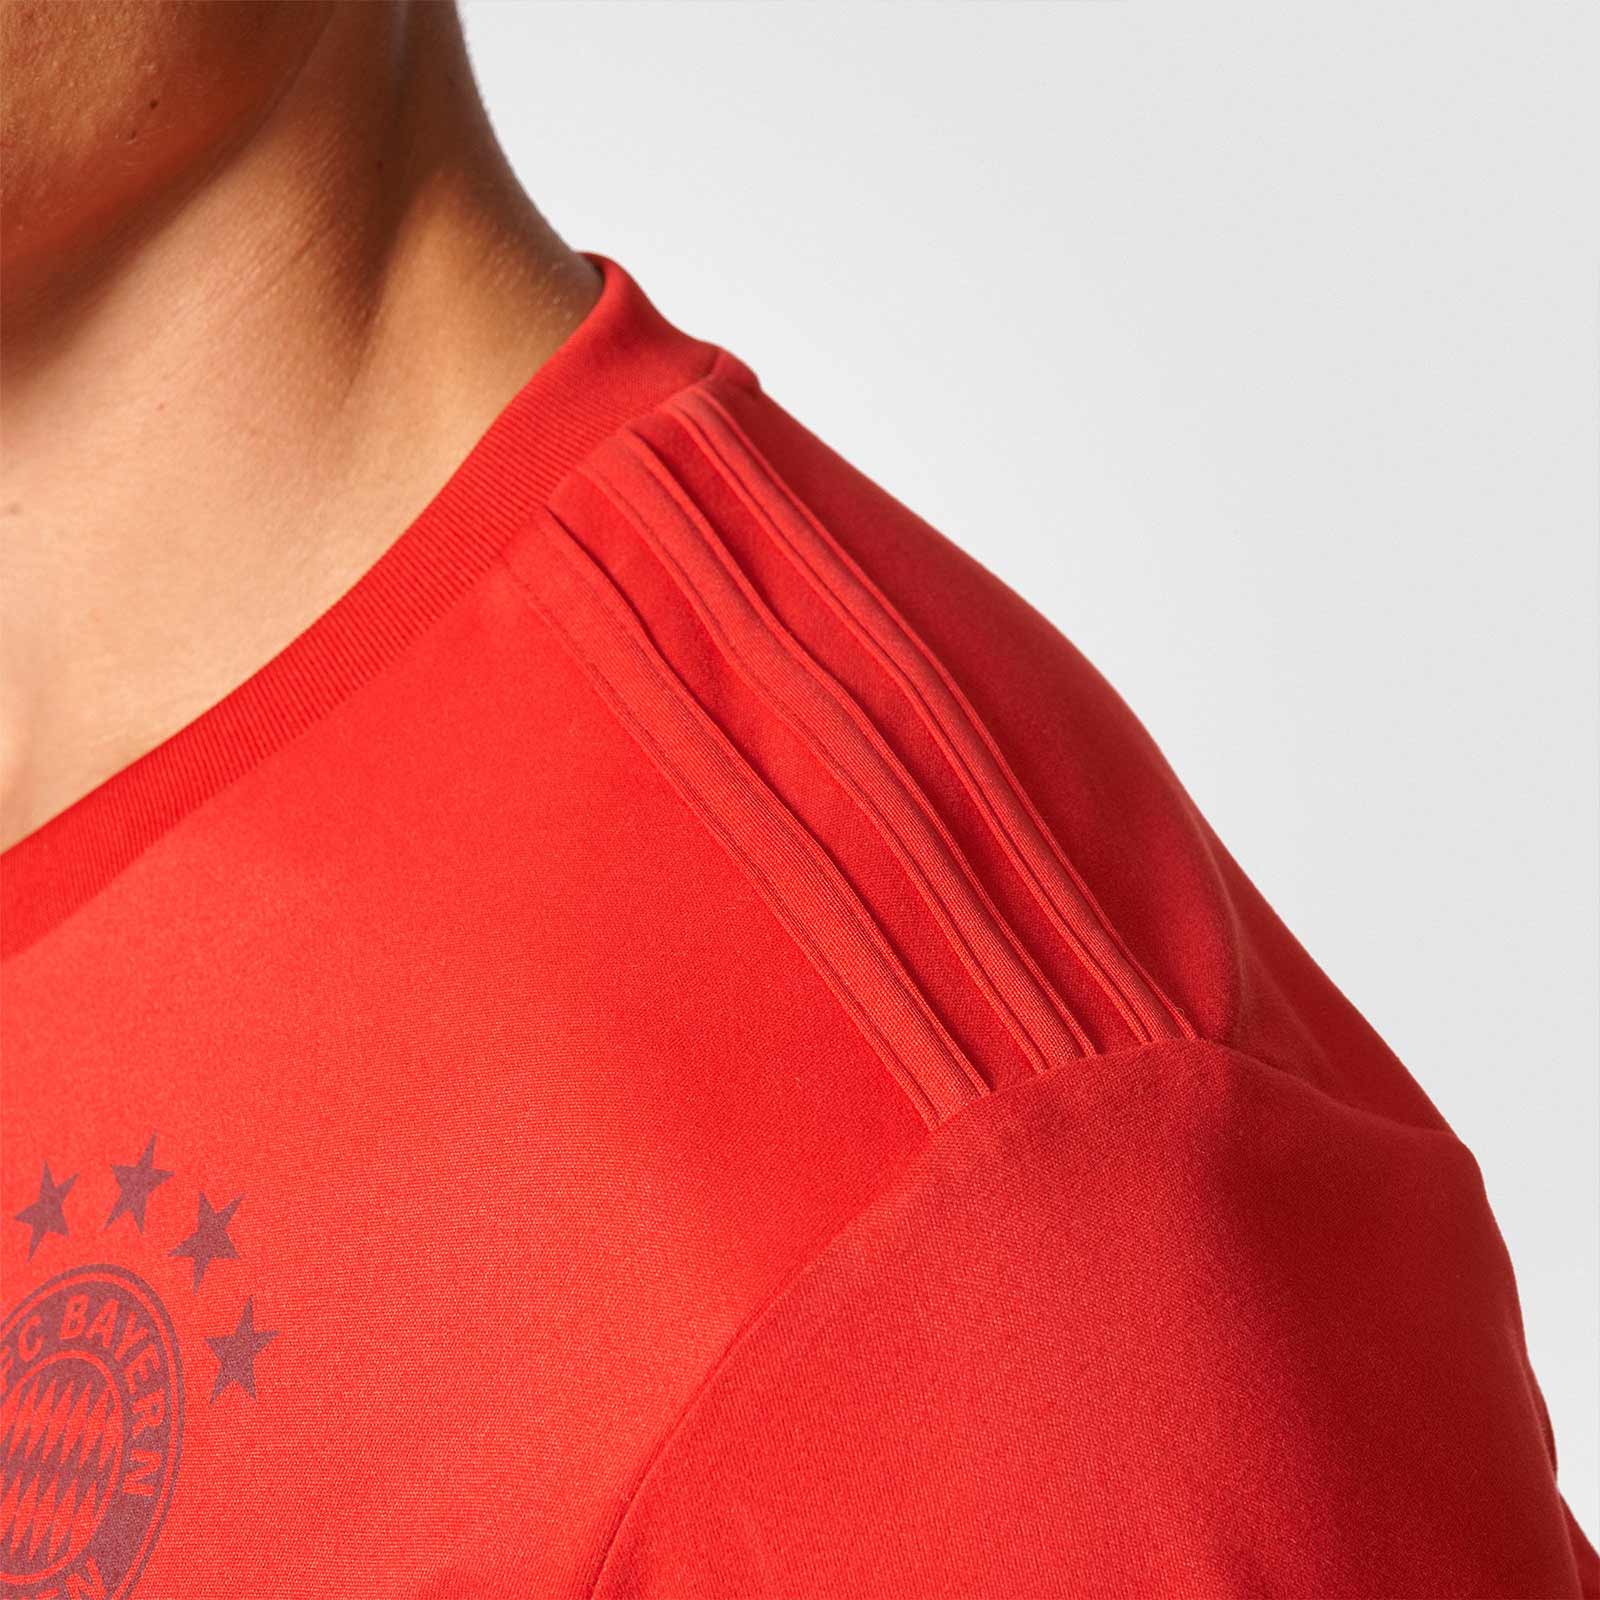 Adidas Parley Bayern Munich Kit Released - Footy Headlines